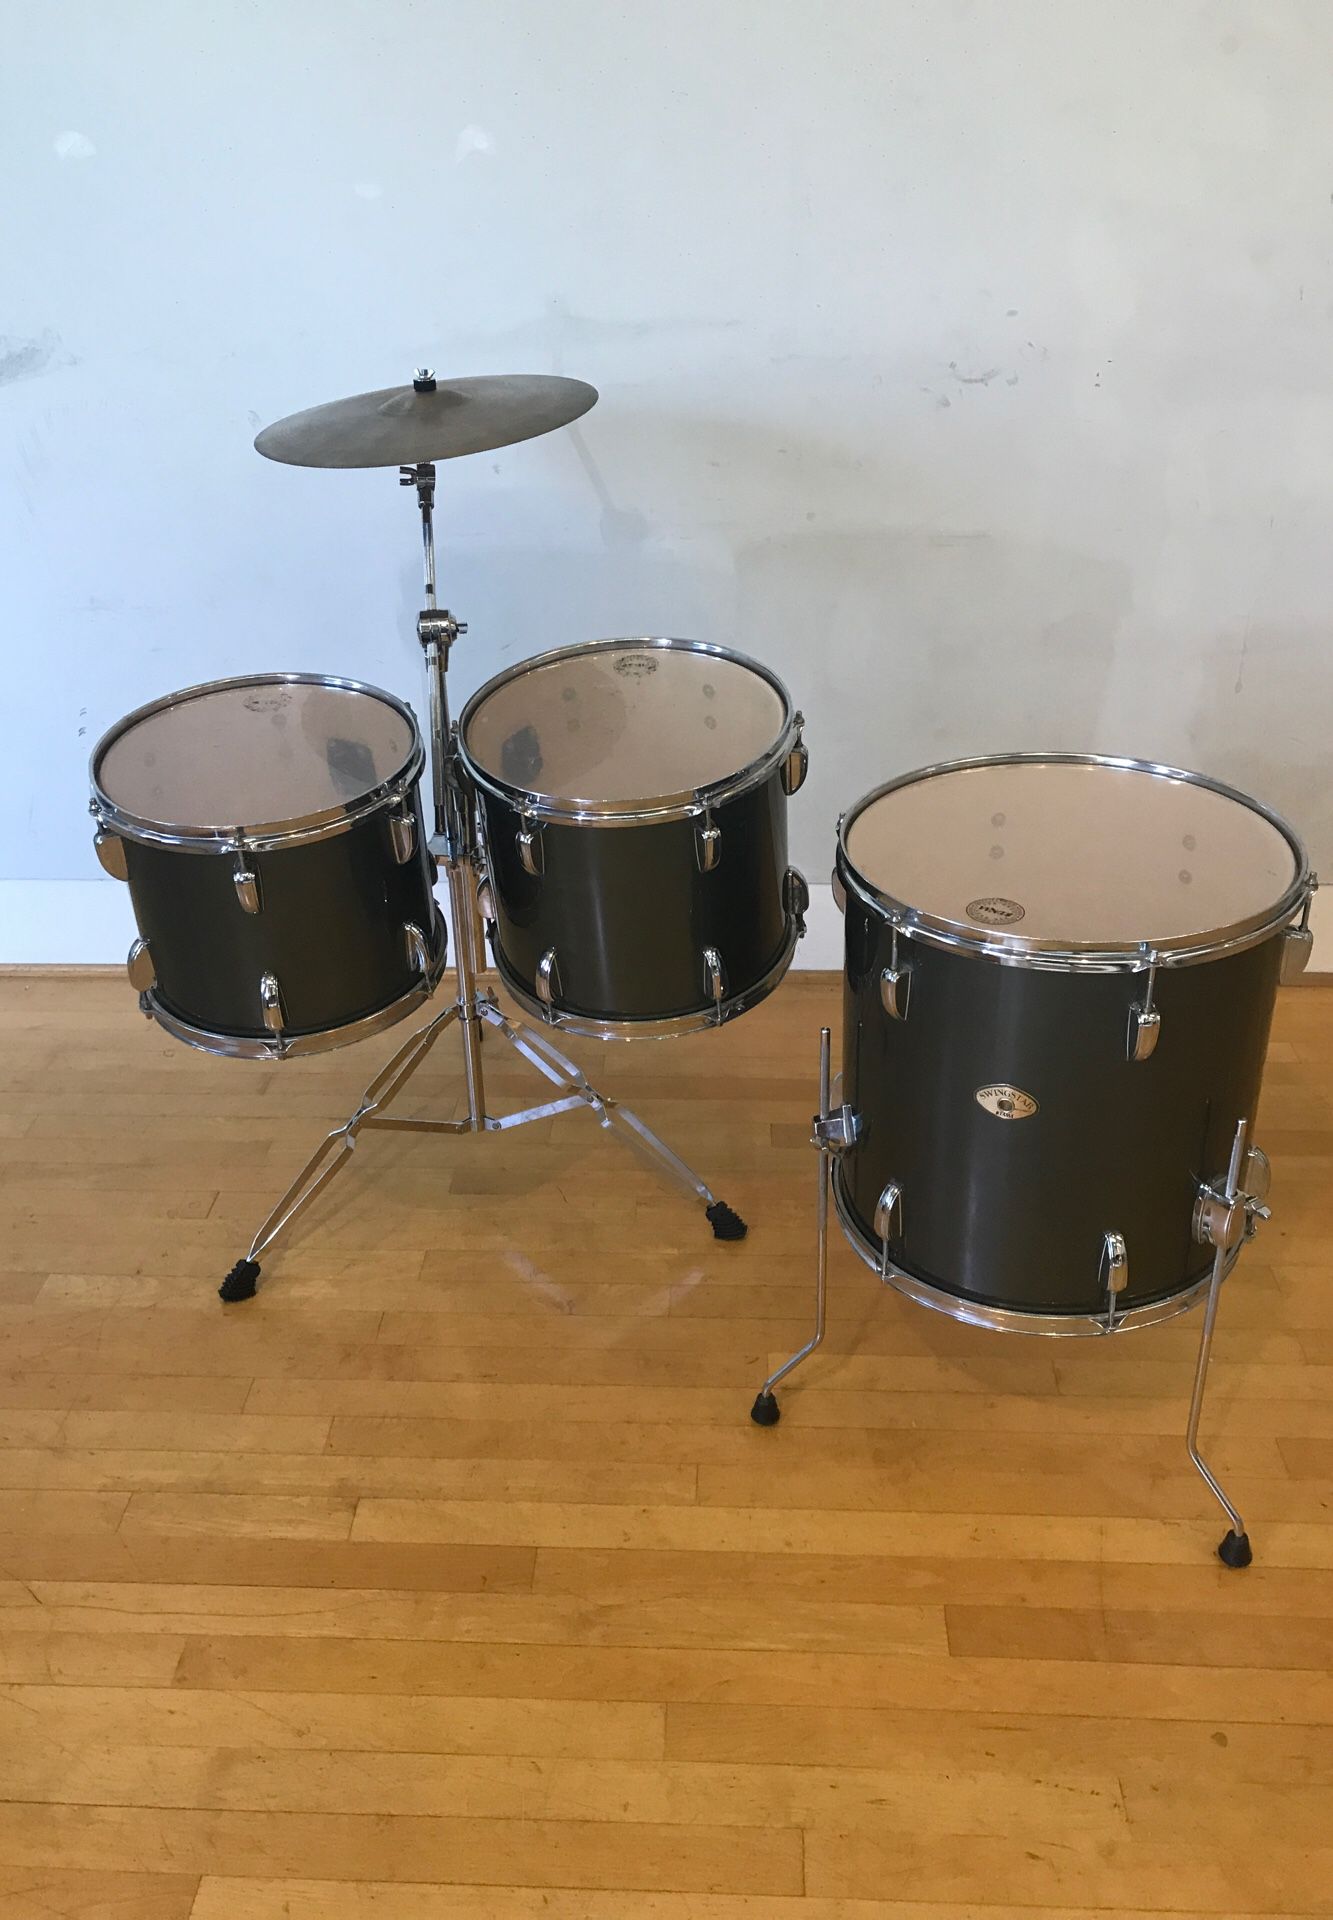 Tama Swingstar 3 tom drum set up with cymbal 12” 13” ride 16” floor drums boom stand Ontario